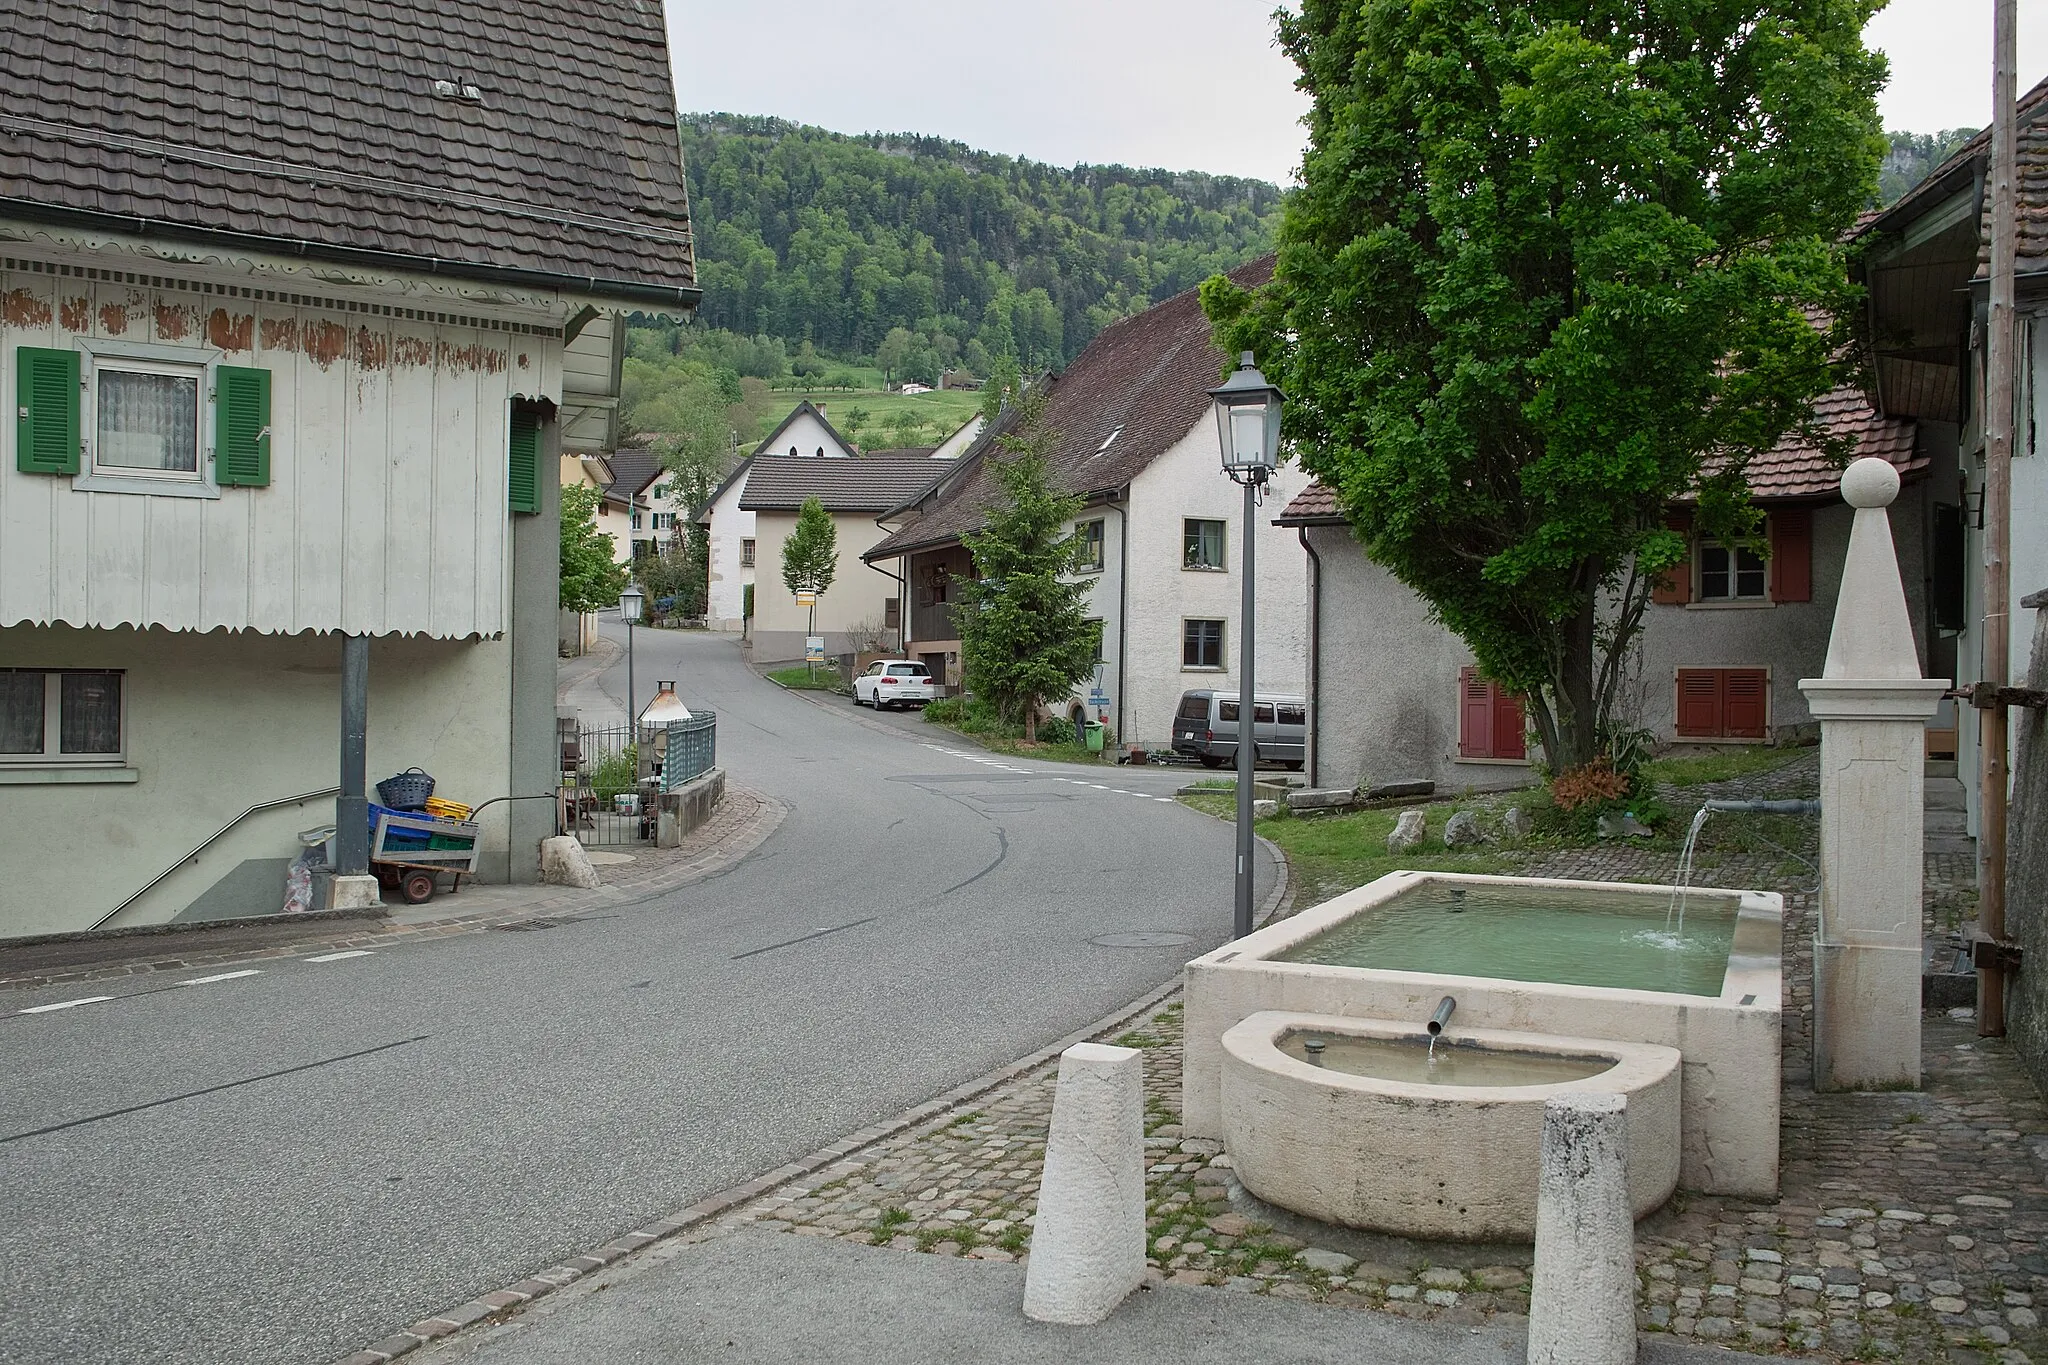 Photo showing: Village of Bärschwil, canton of Solothurn, Switzerland.